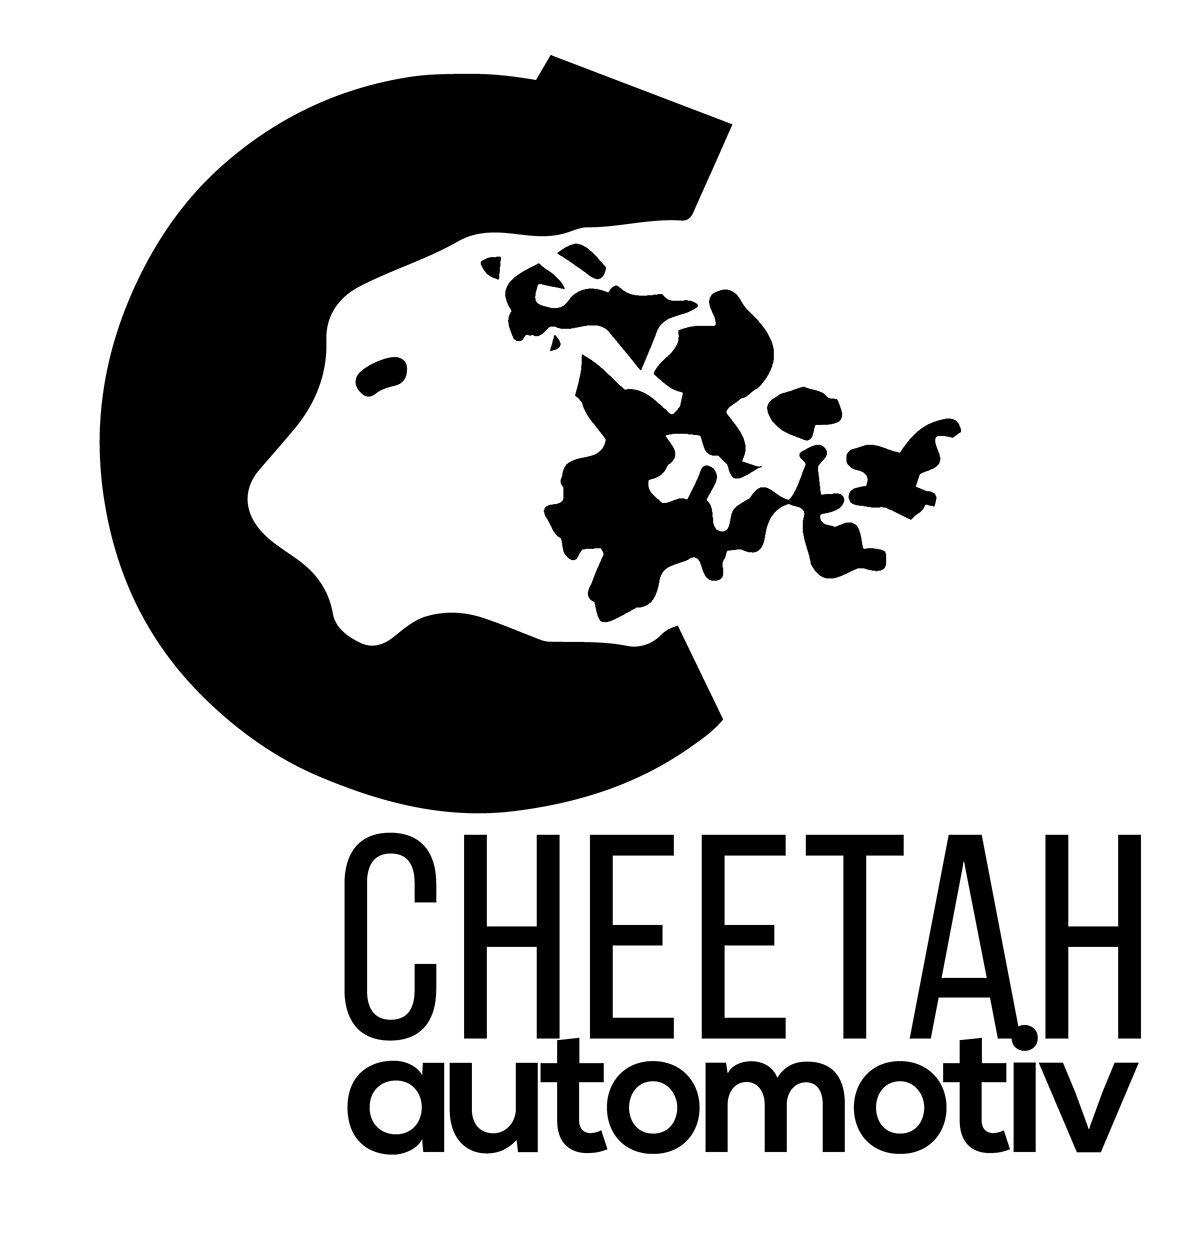 Cheetah Car Logo - Cheetah Automotiv Concept Logo